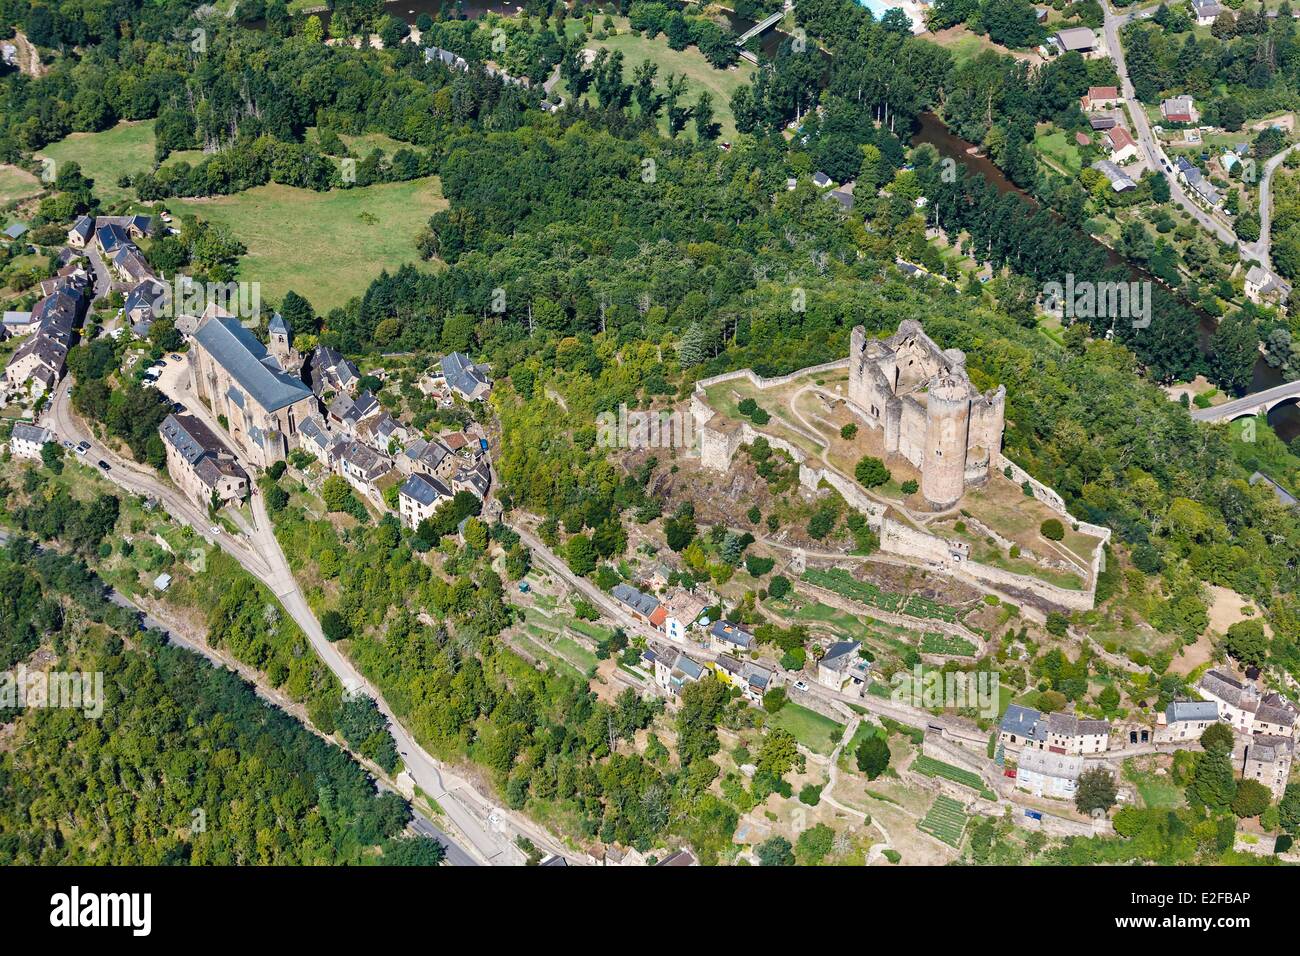 France Aveyron Najac labelled Les Plus Beaux Villages de France (The Most Beautiful Villages of France) the castle (aerial view) Stock Photo